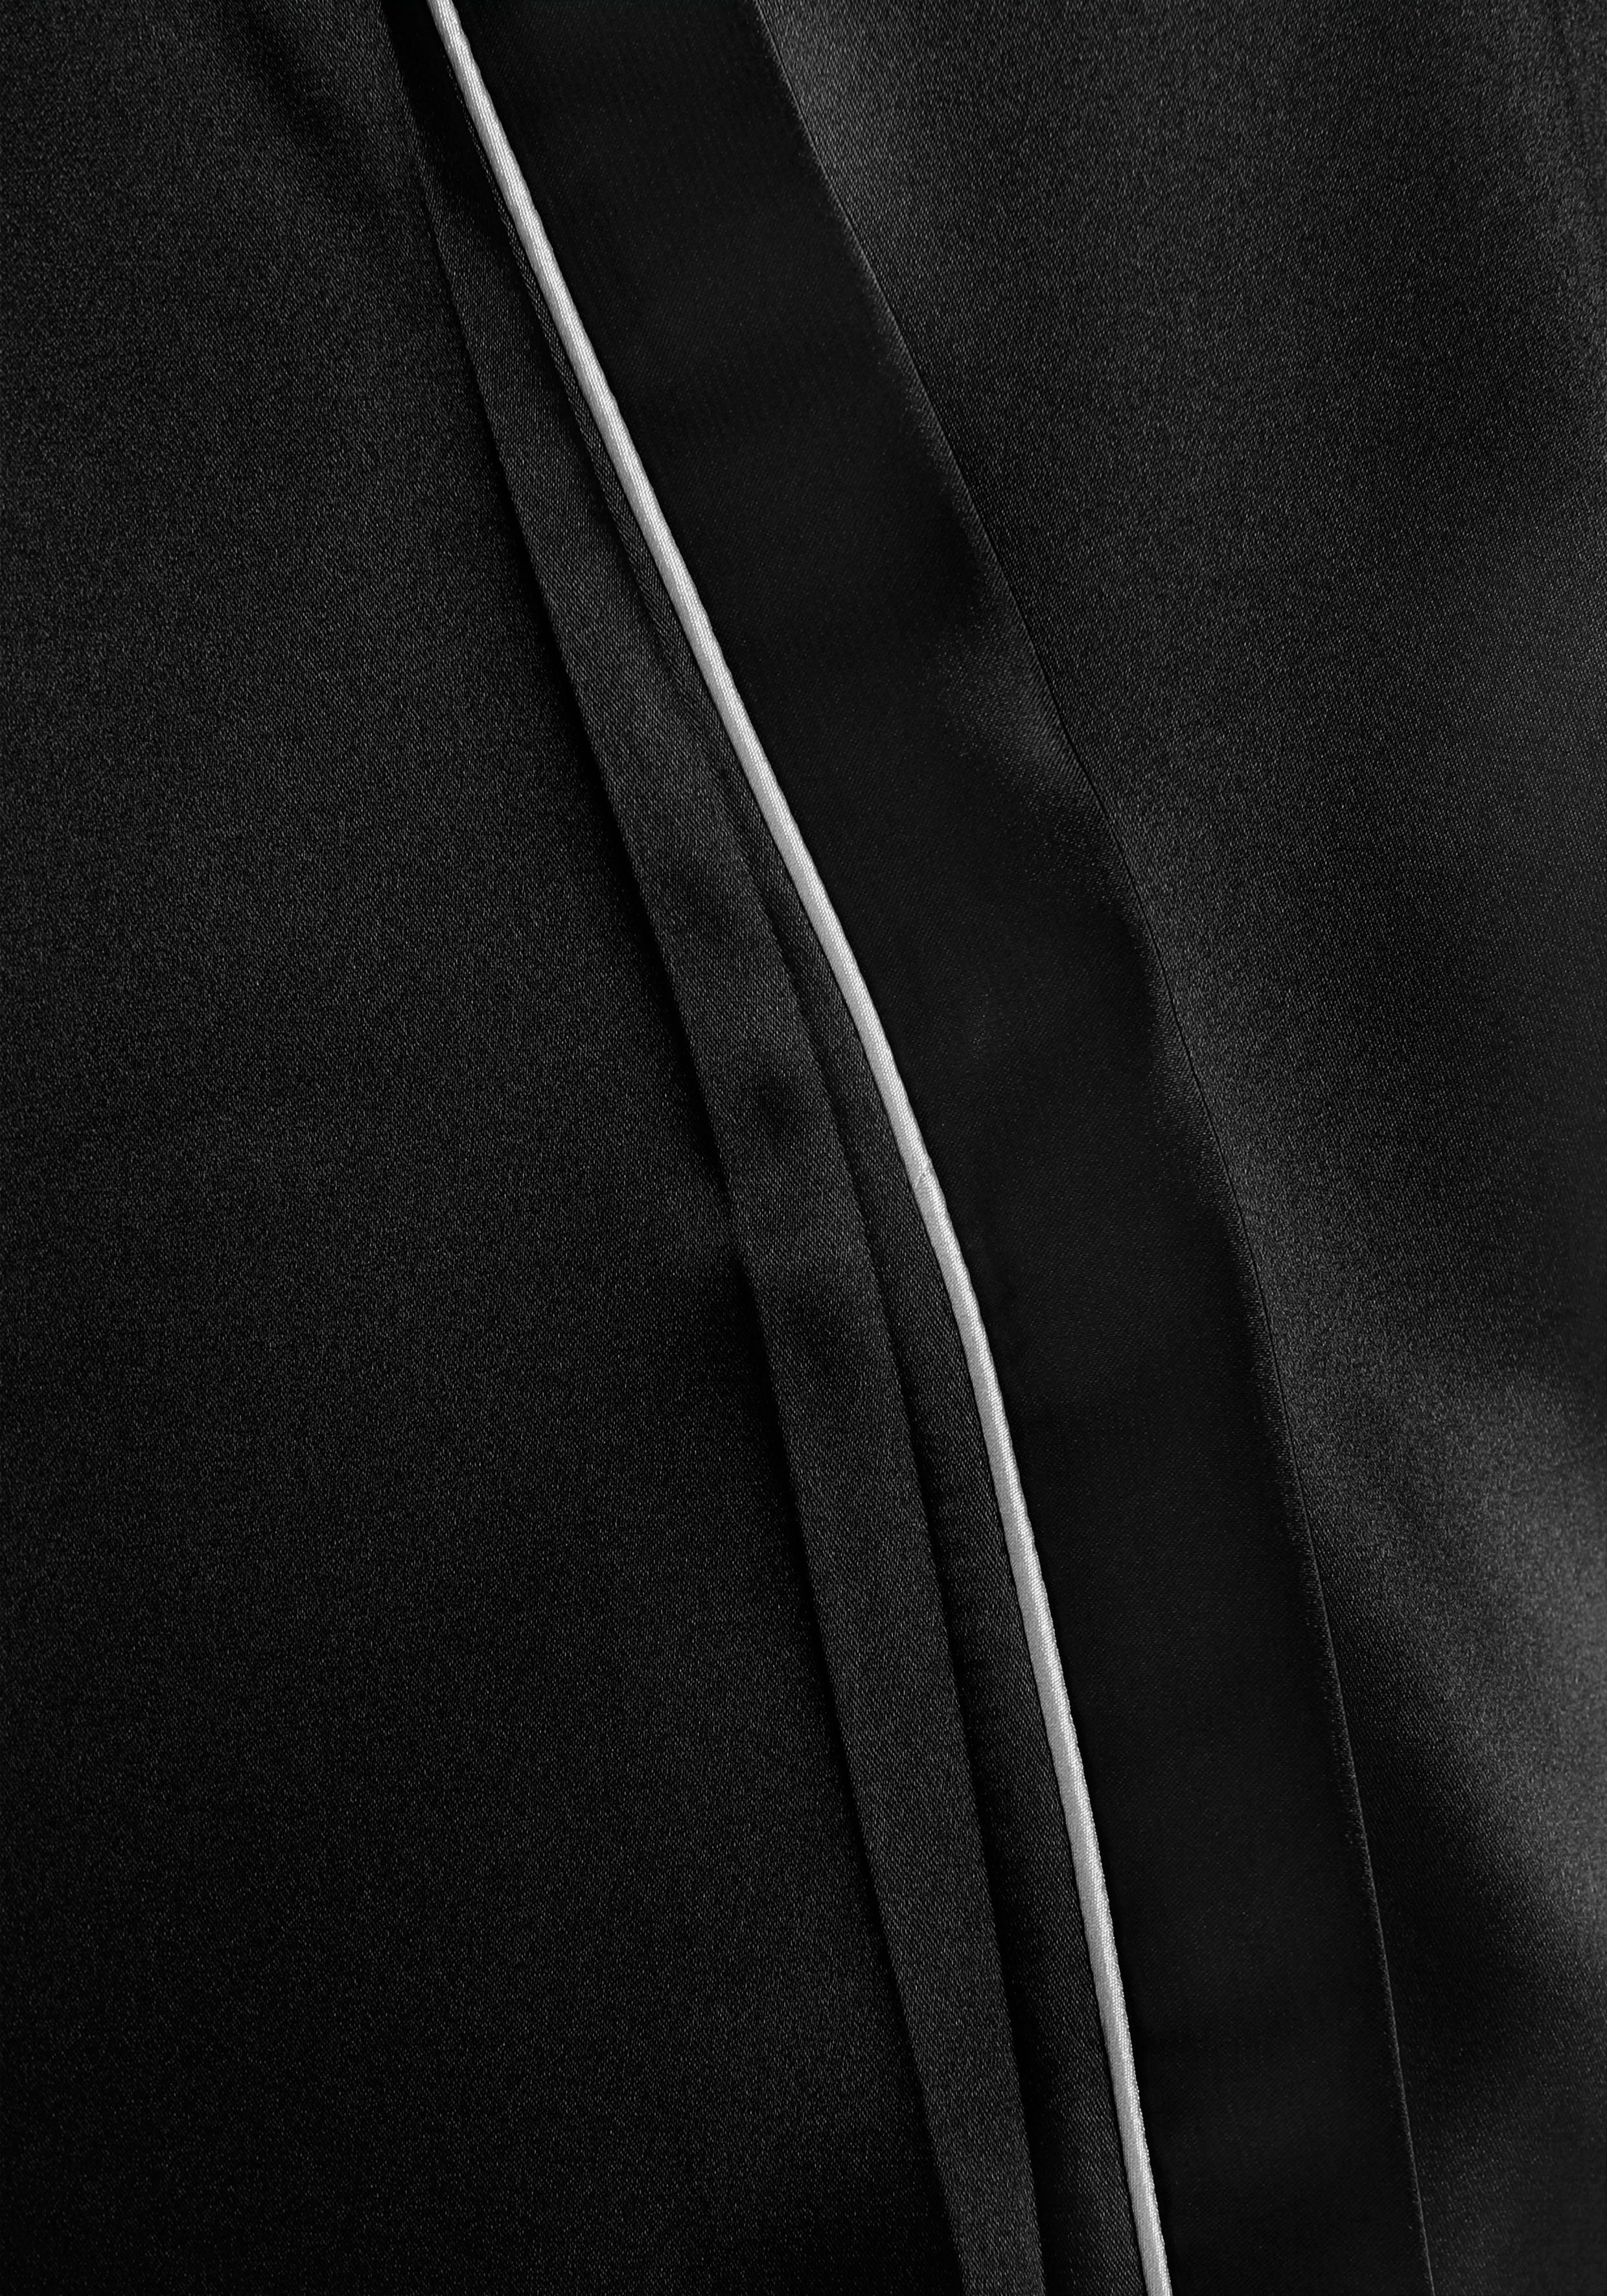 Kimono, Banani Kontrastpaspel-Details mit schwarz Kurzform, Satin, Bruno